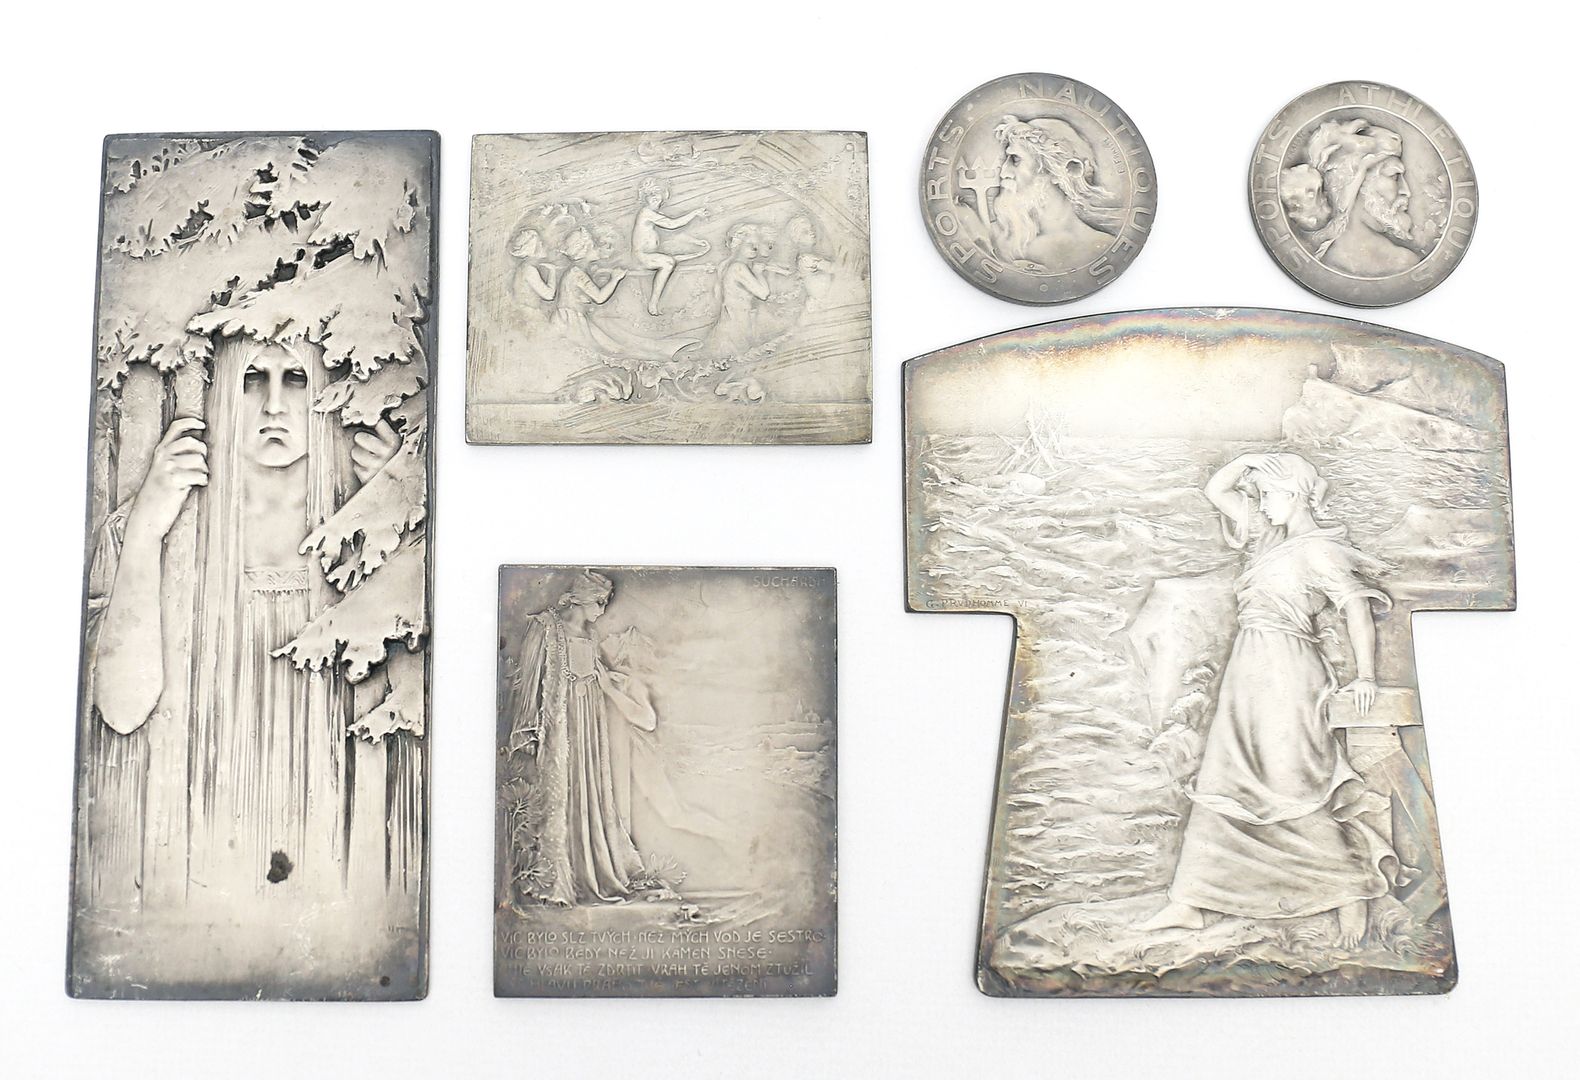 Sechs Jugendstil-Reliefplaketten bzw. -Medaillen.